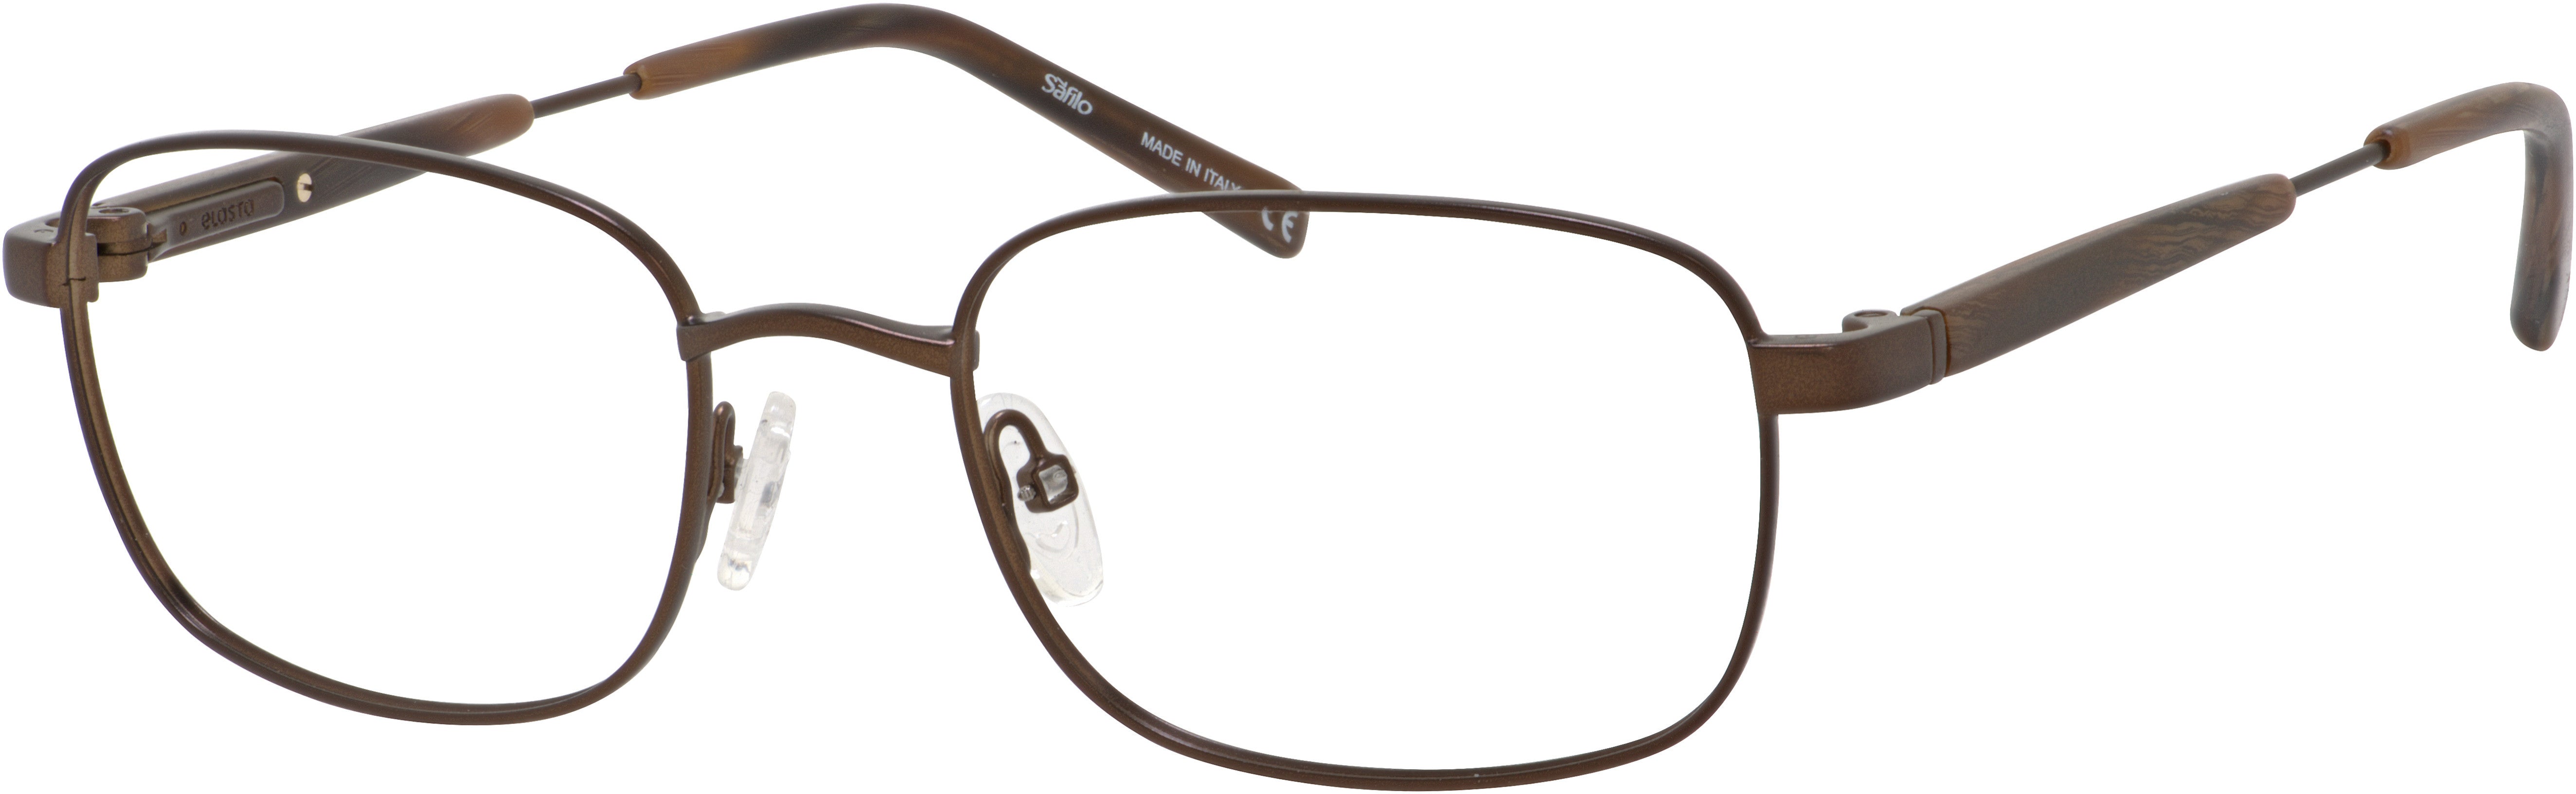  Elasta 7221 Rectangular Eyeglasses 009Q-009Q  Brown (00 Demo Lens)